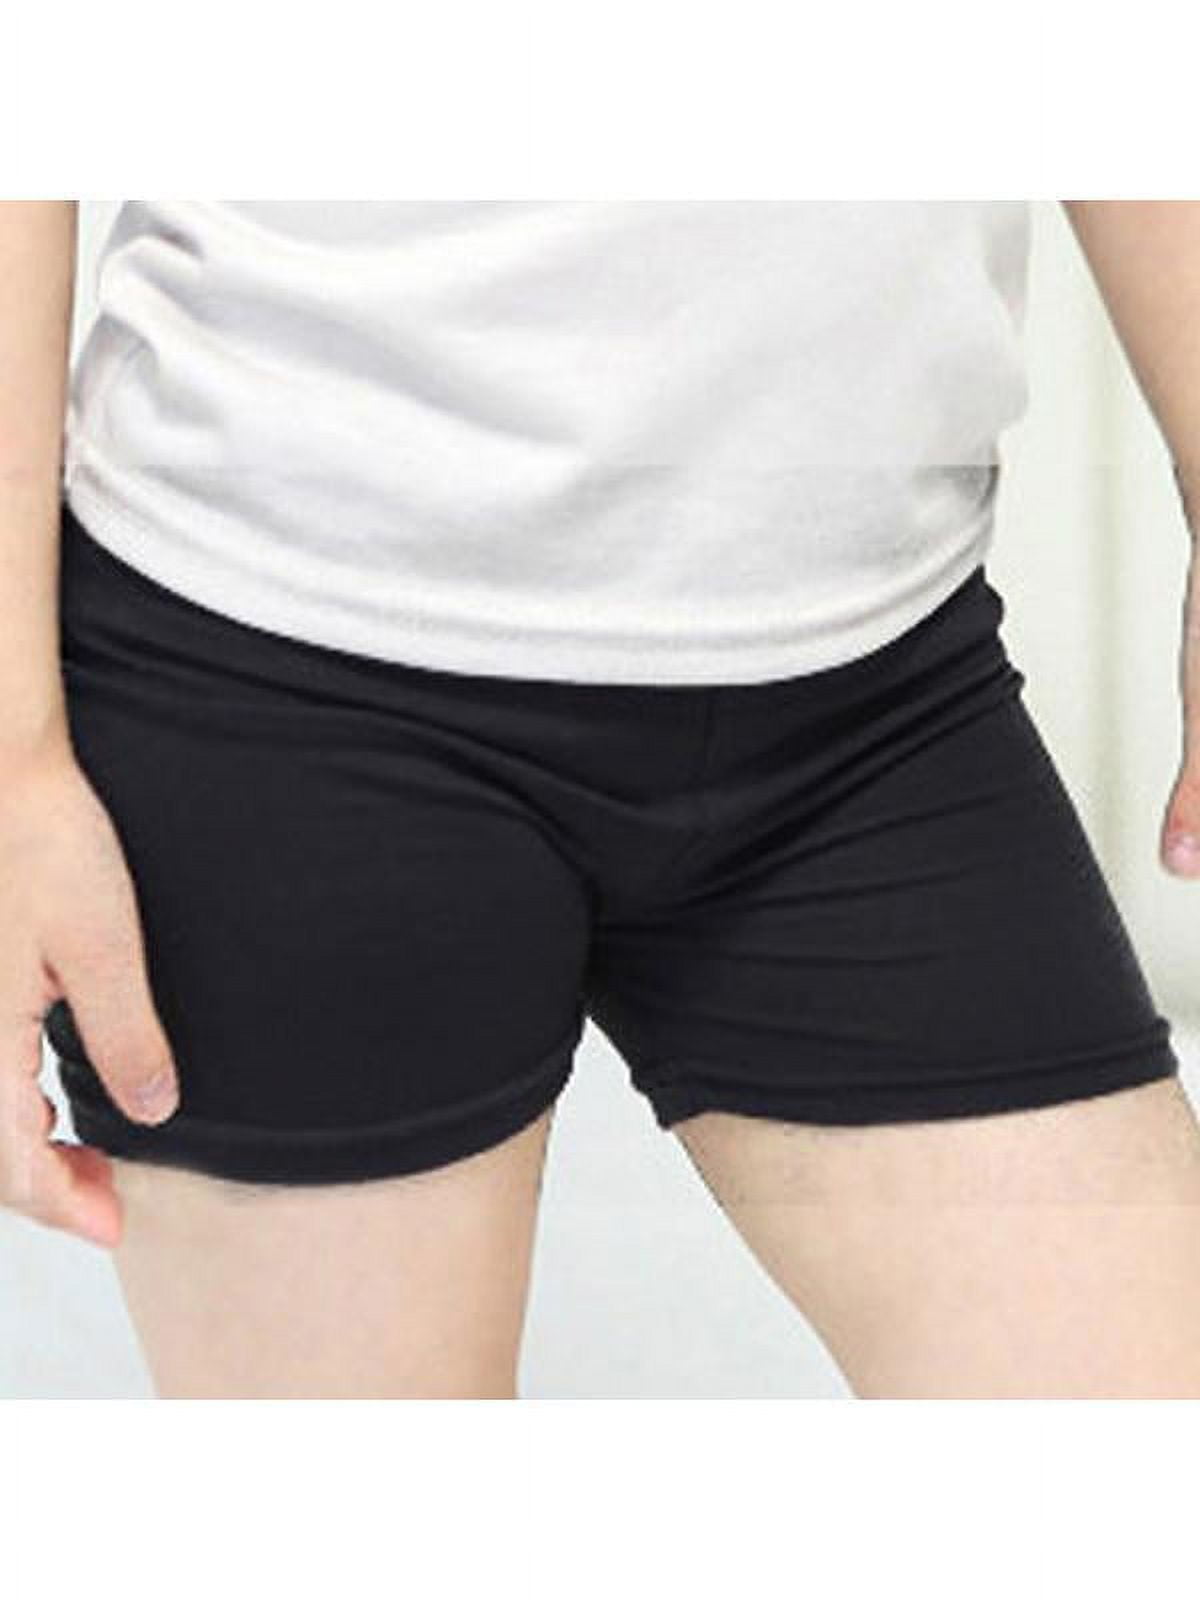 Taykoo Kids Girls Summer Short Pants Leggings Stretch Safety Shorts